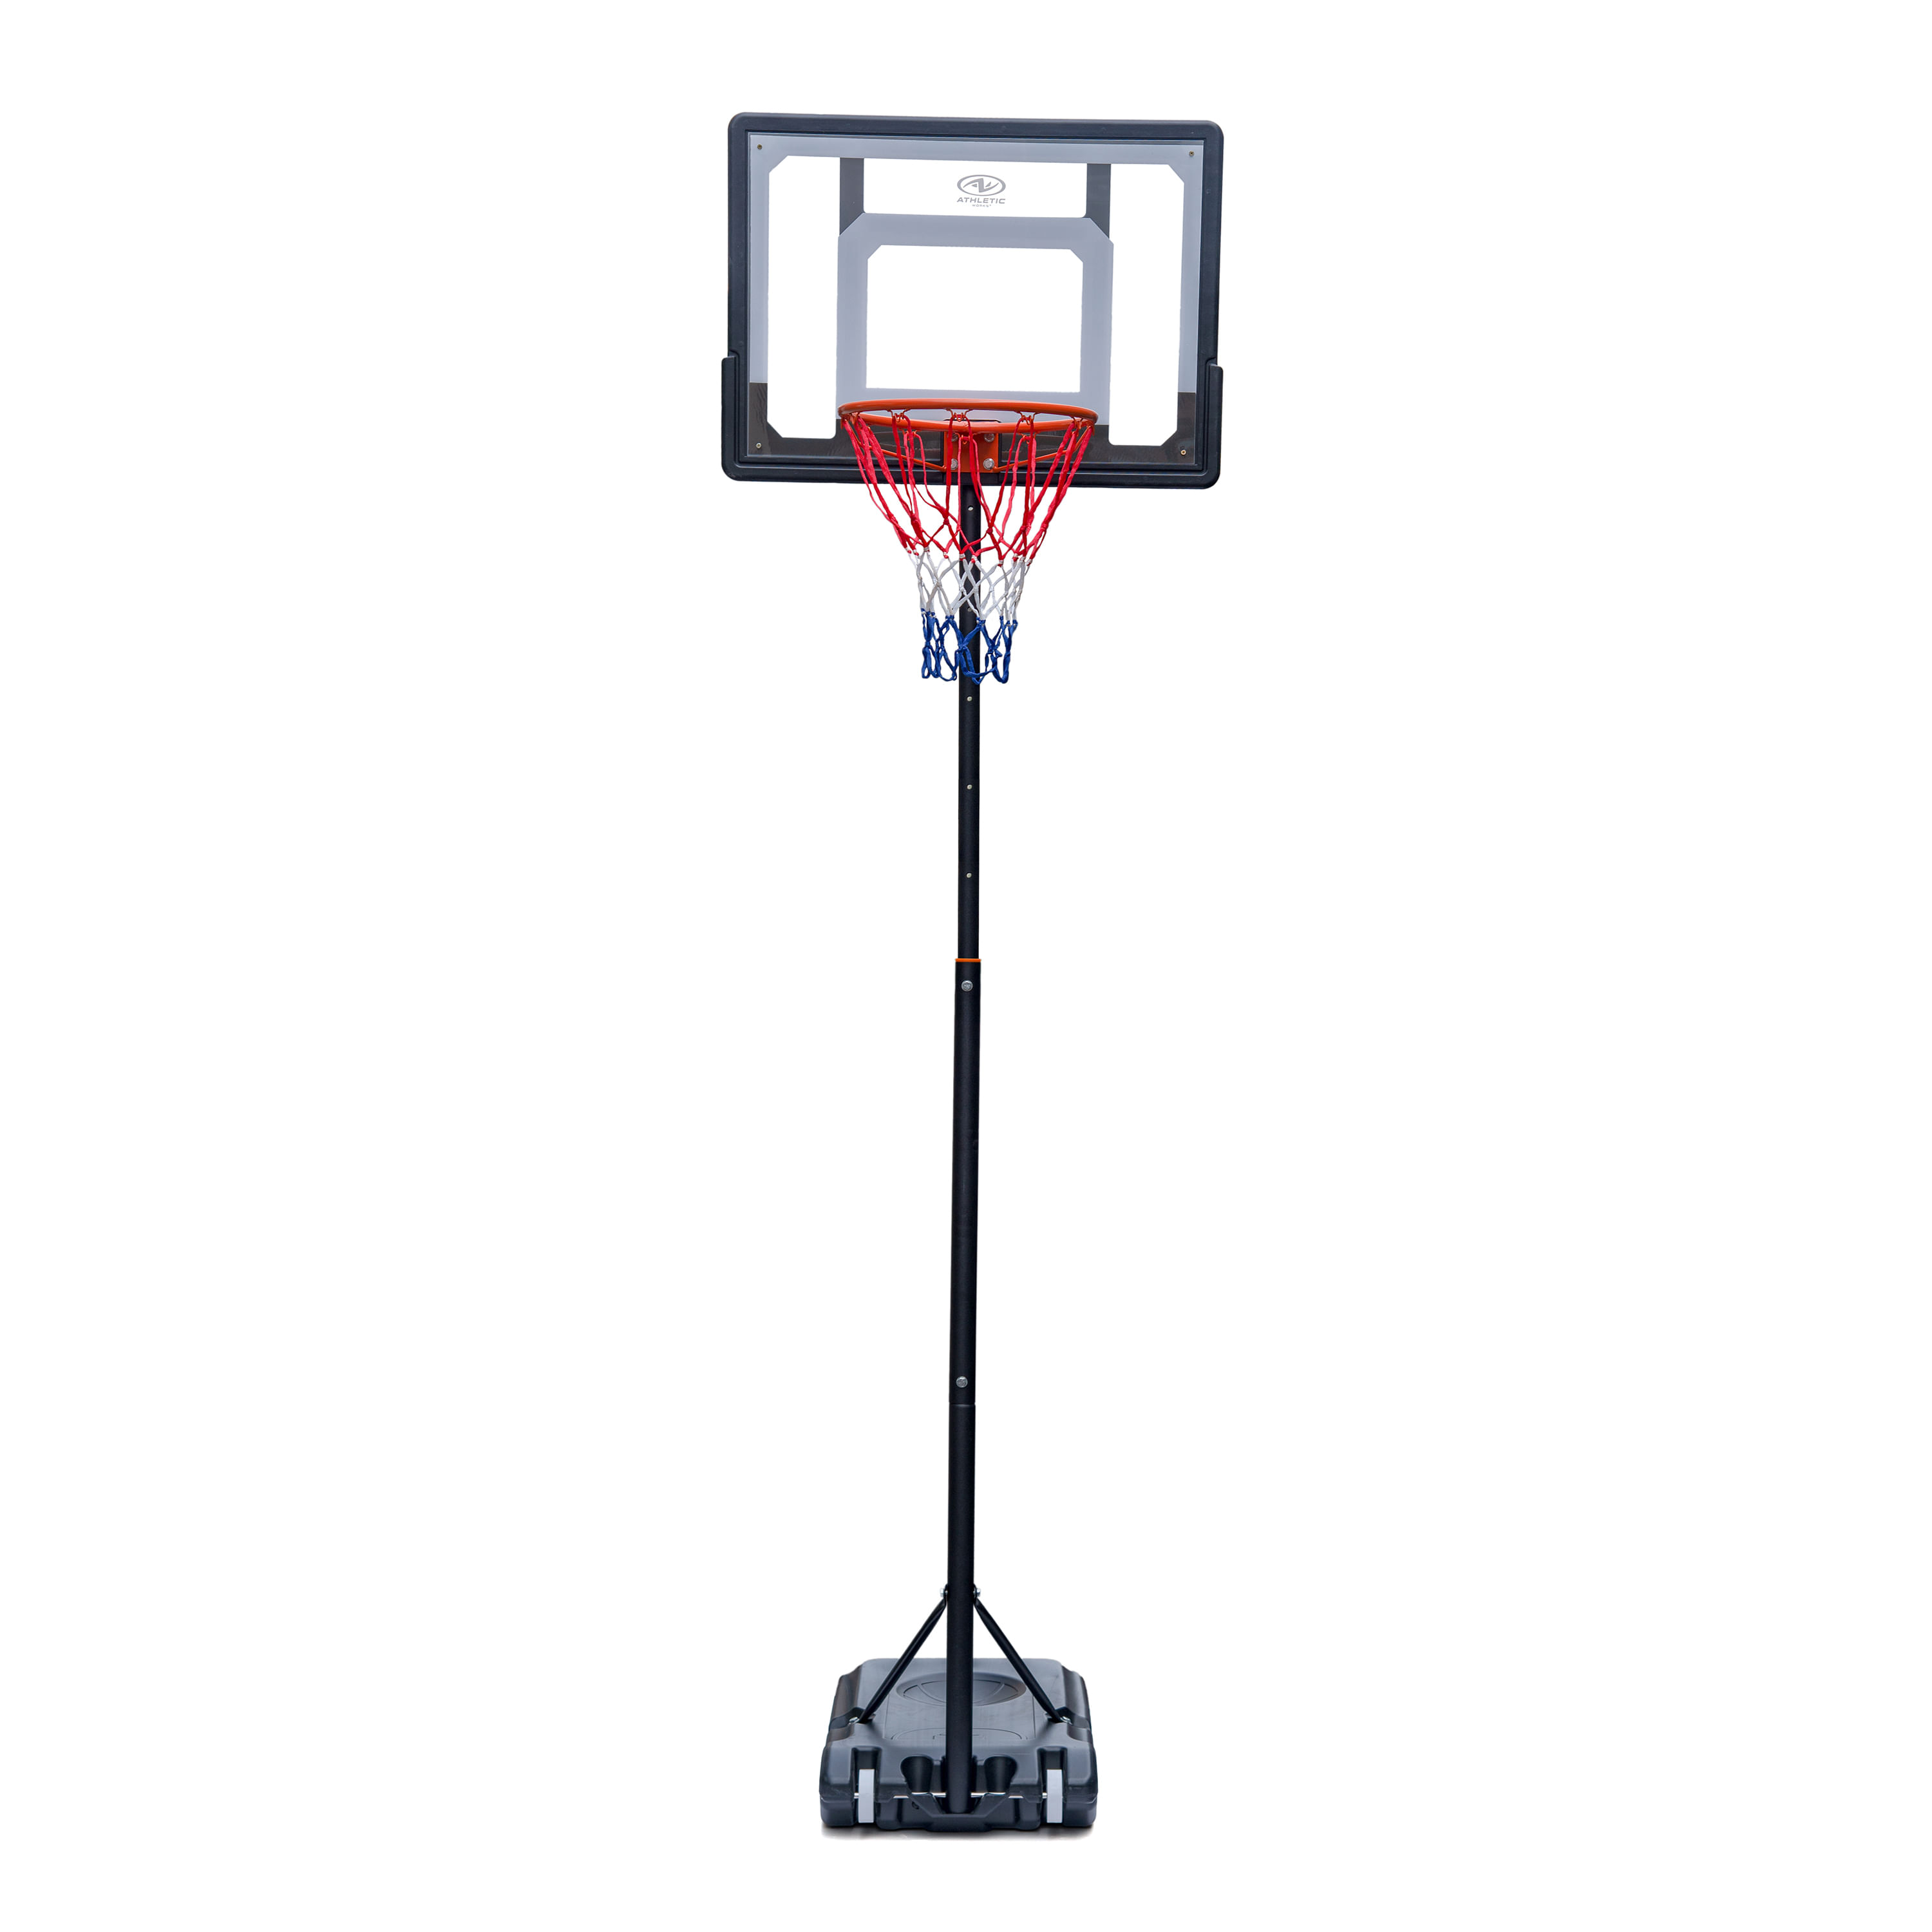 Comprar Tablero Para Basketball Athletic Works | Walmart Costa Rica